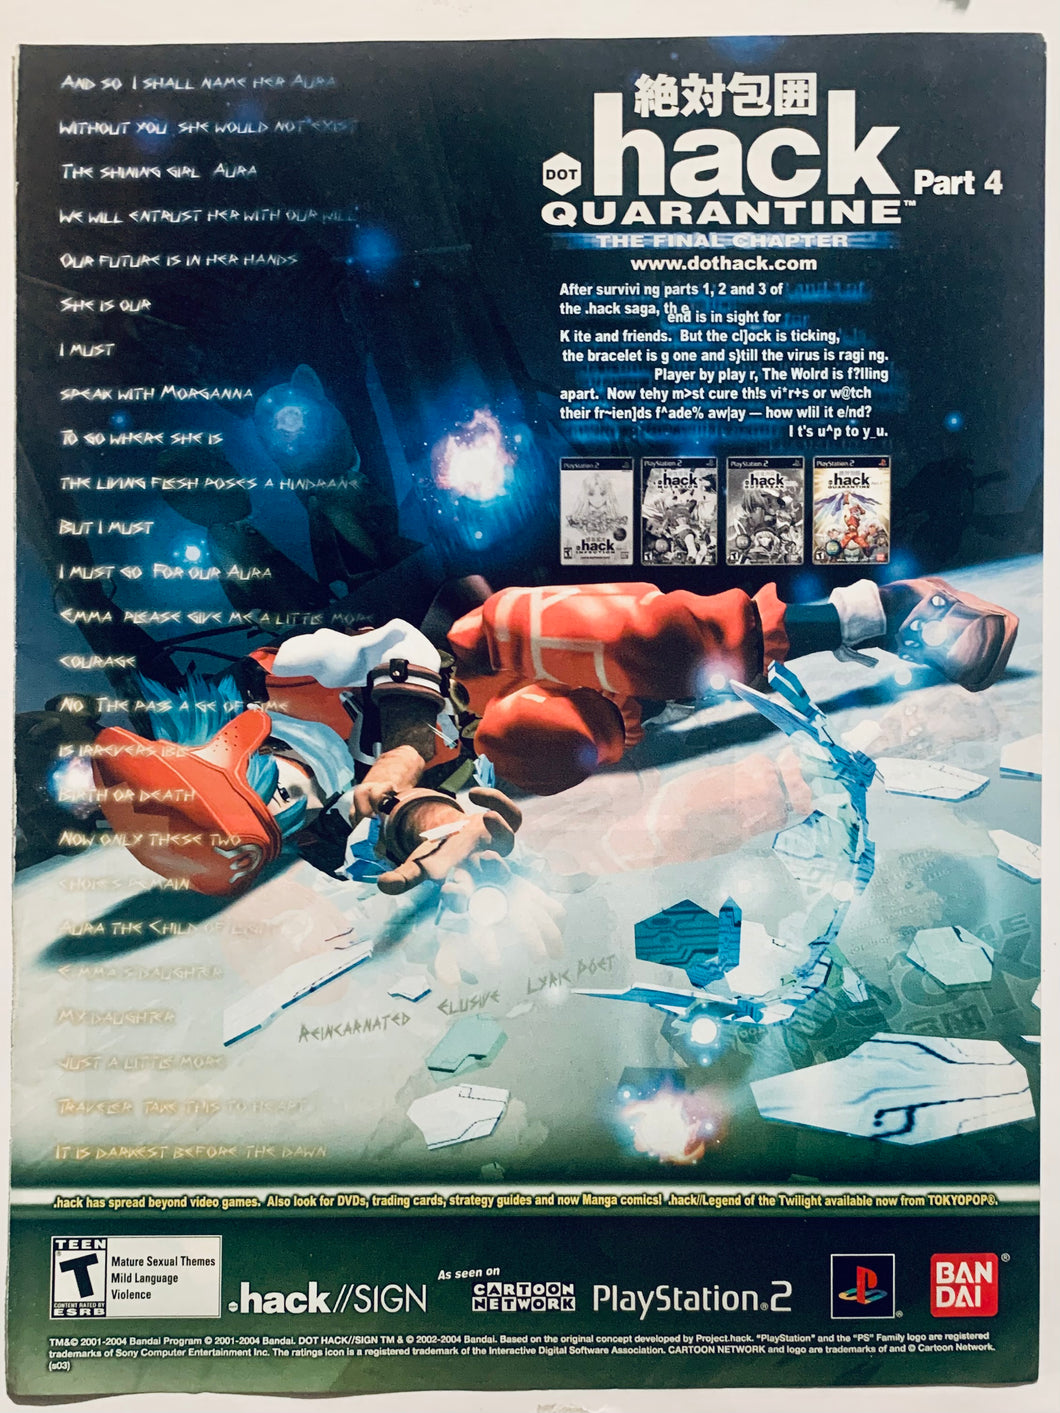 .hack//QUARANTINE - PS2 - Original Vintage Advertisement - Print Ads - Laminated A4 Poster